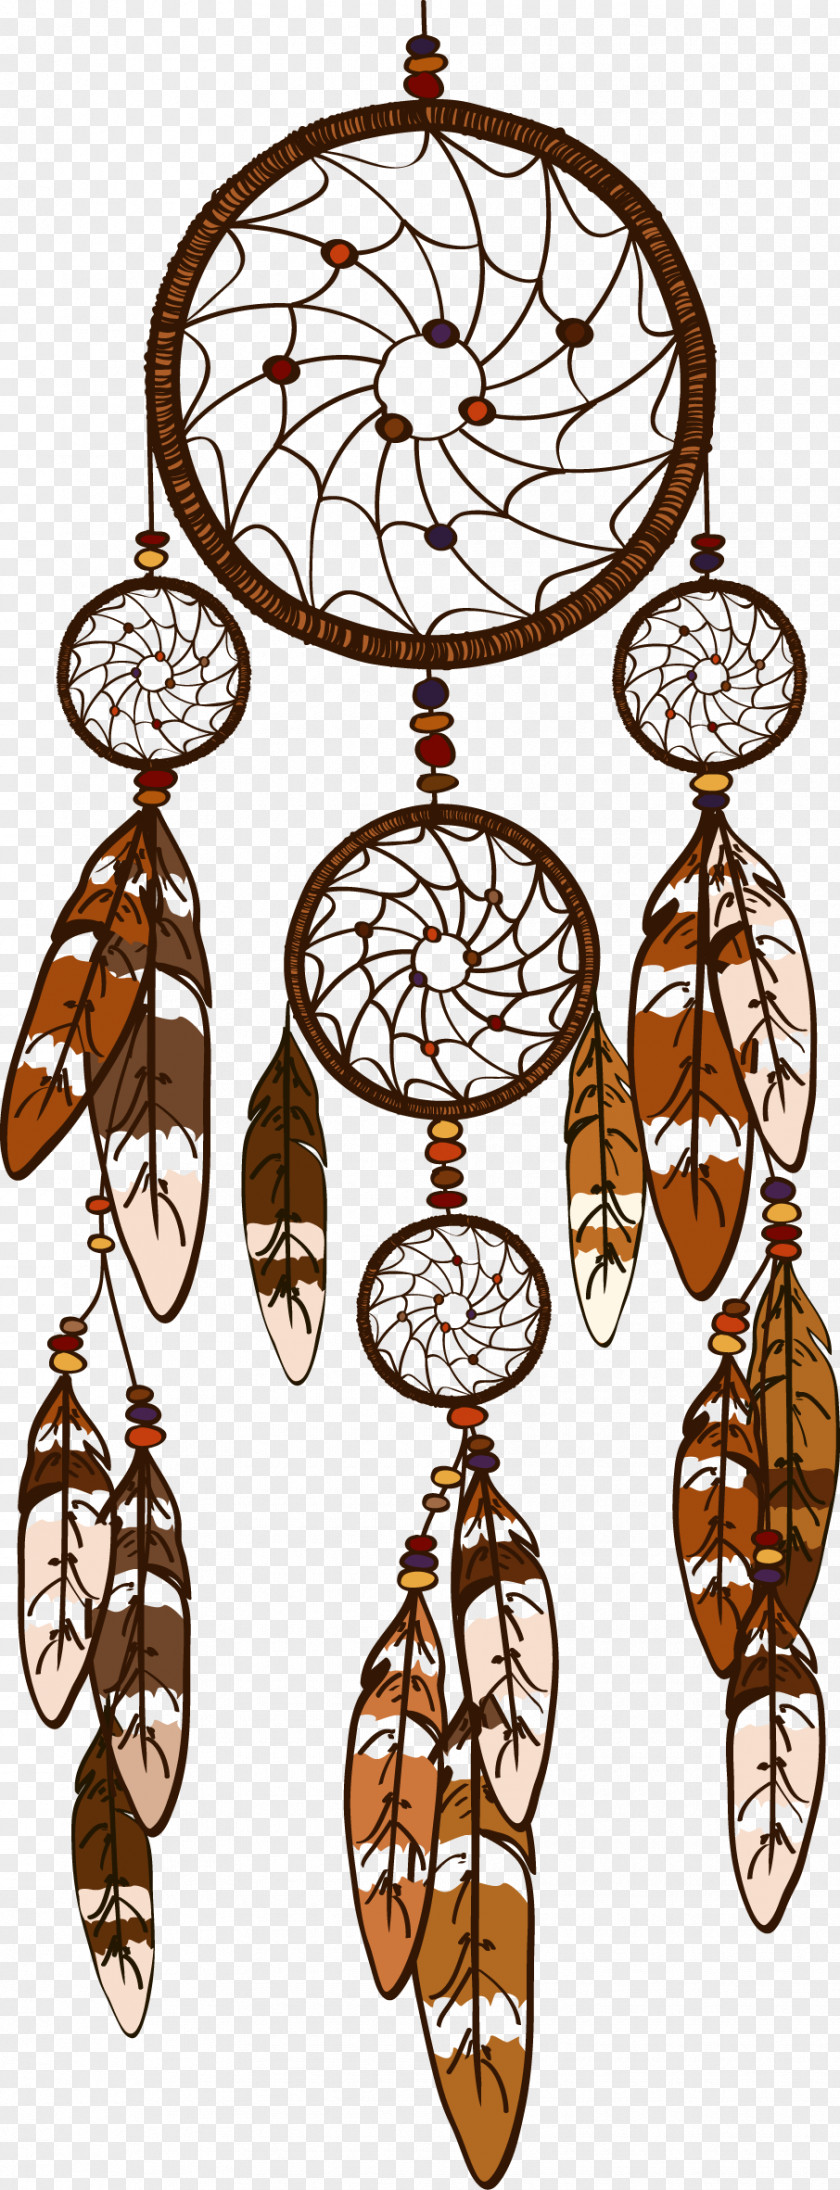 Decorative Dreamcatcher Feather Illustration PNG